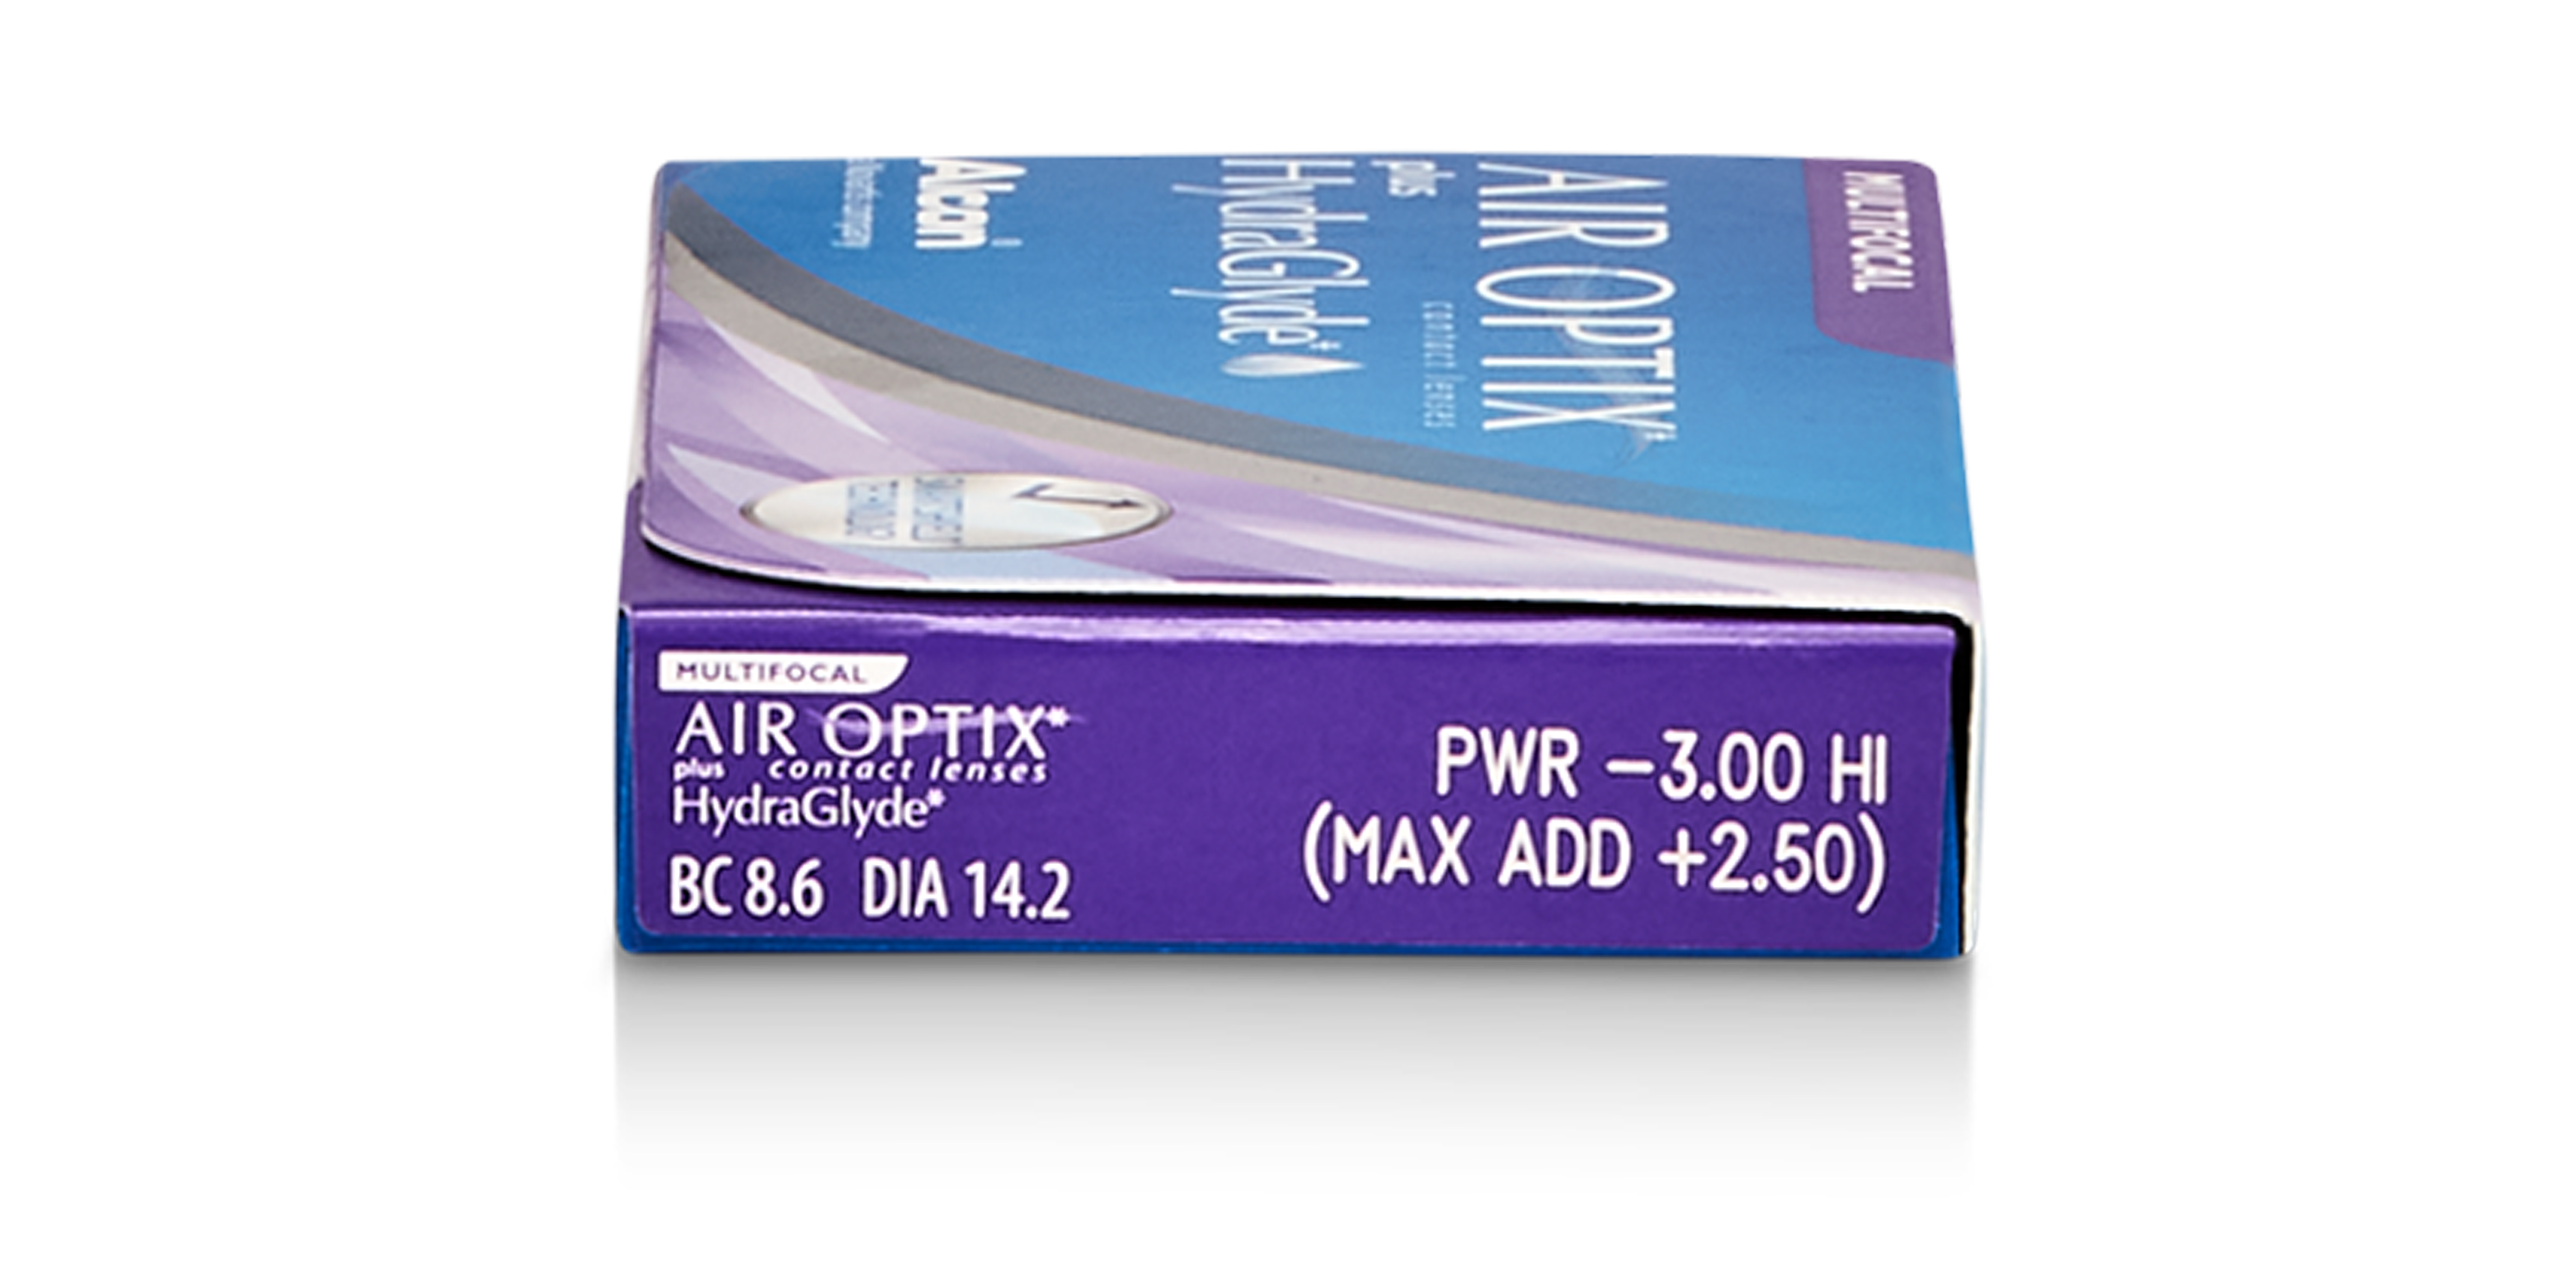 AIR OPTIX® plus Hydraglyde® Multifocal, 6 pack